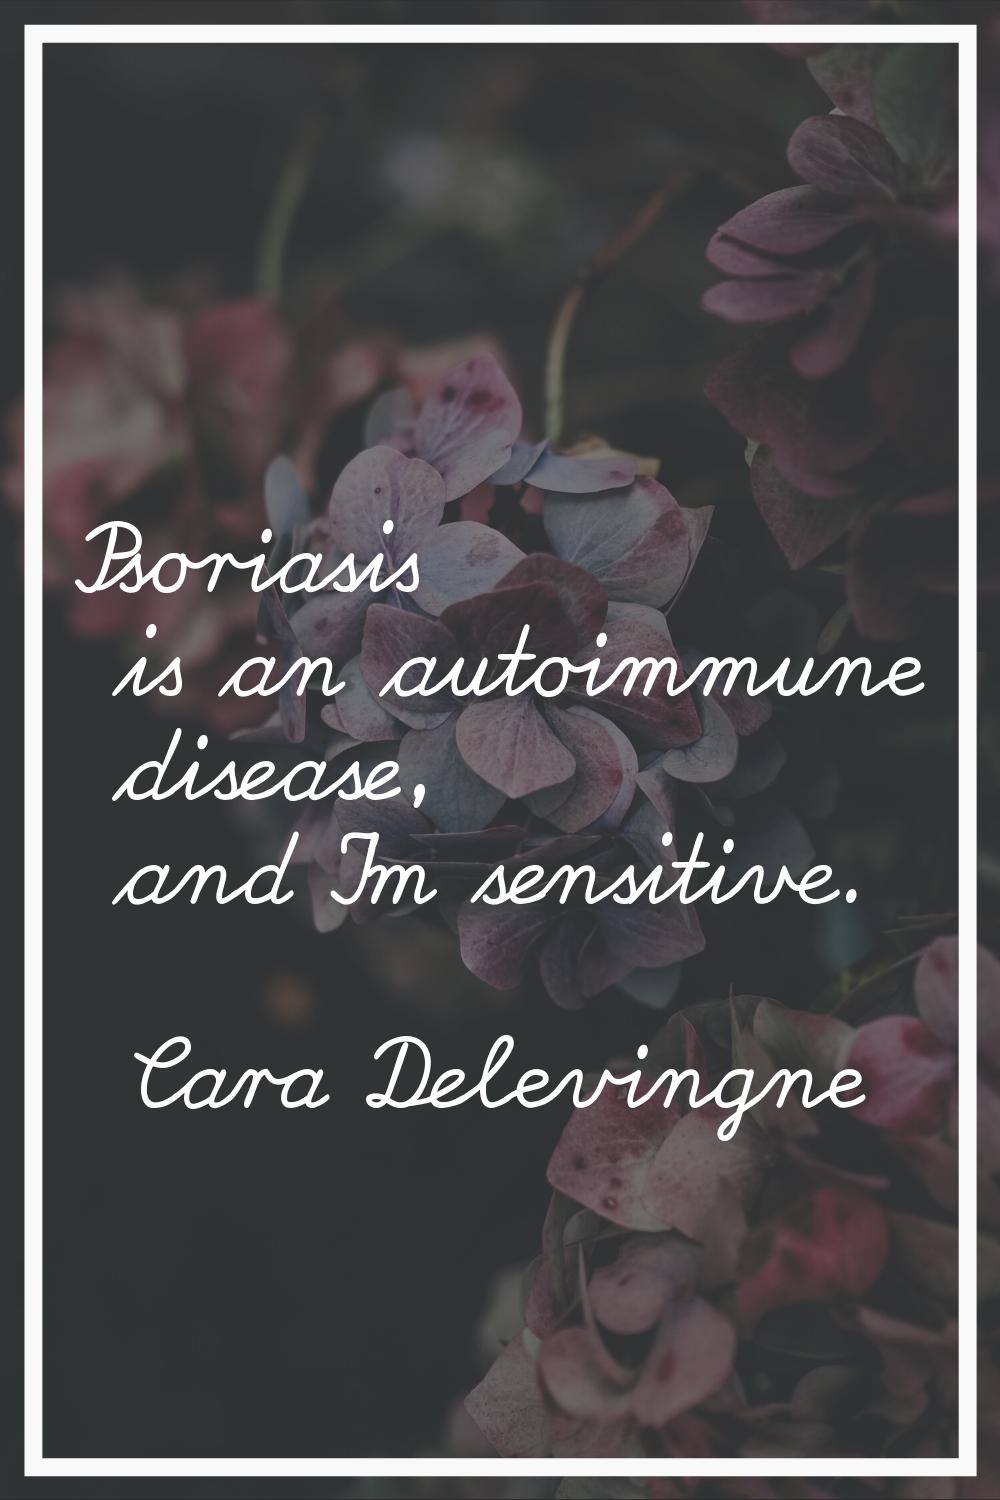 Psoriasis is an autoimmune disease, and I'm sensitive.